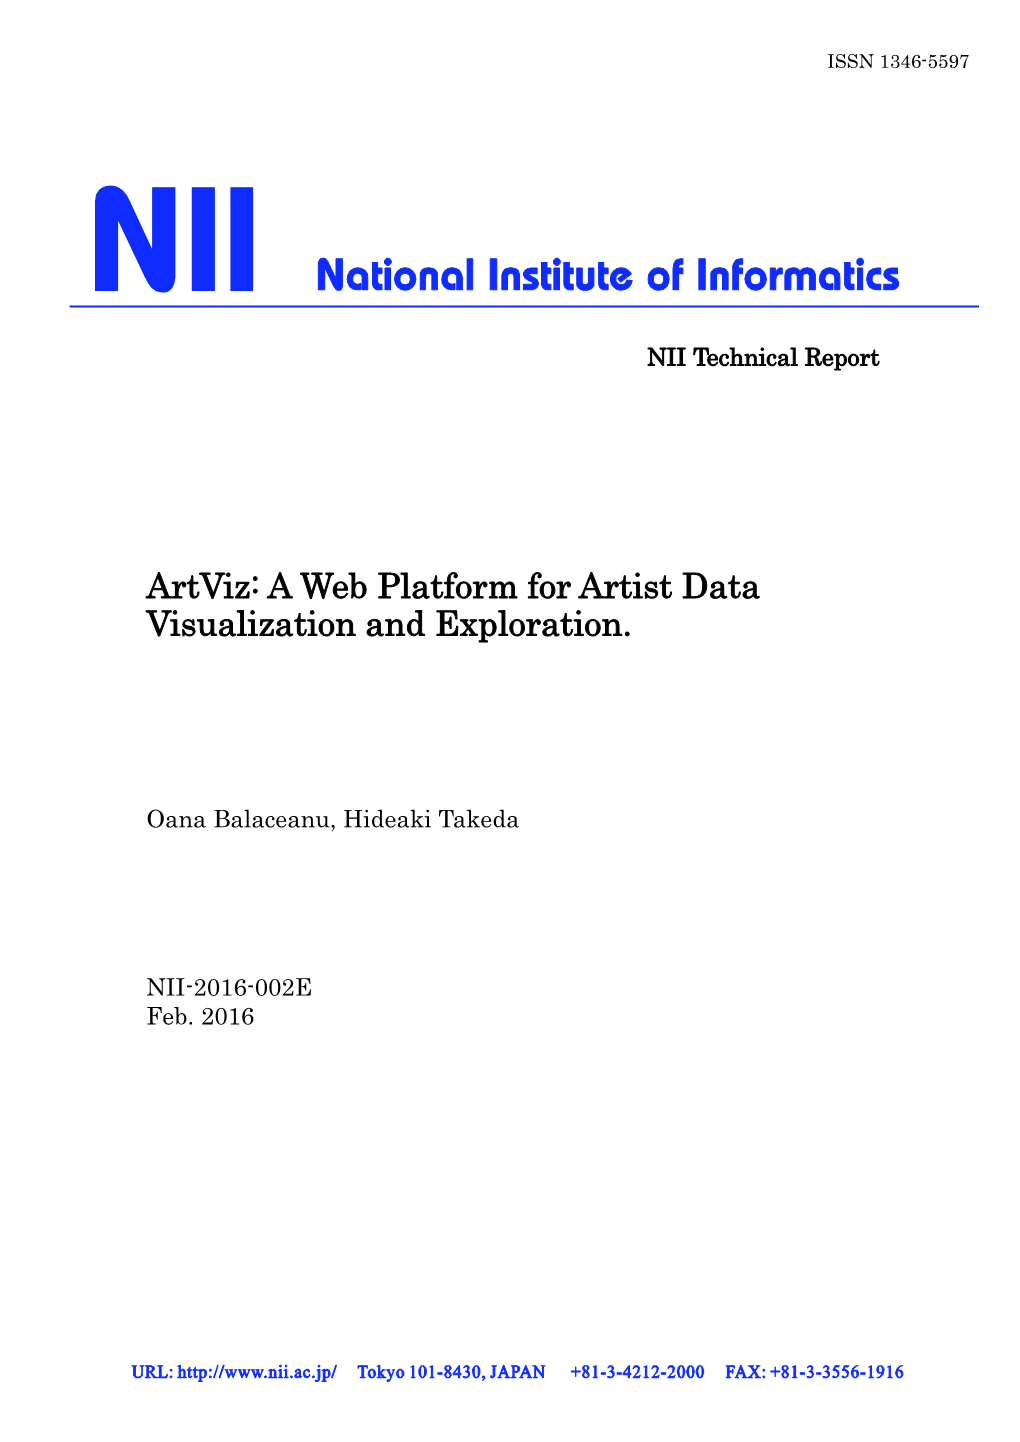 Artviz: a Web Platform for Artist Data Visualization and Exploration